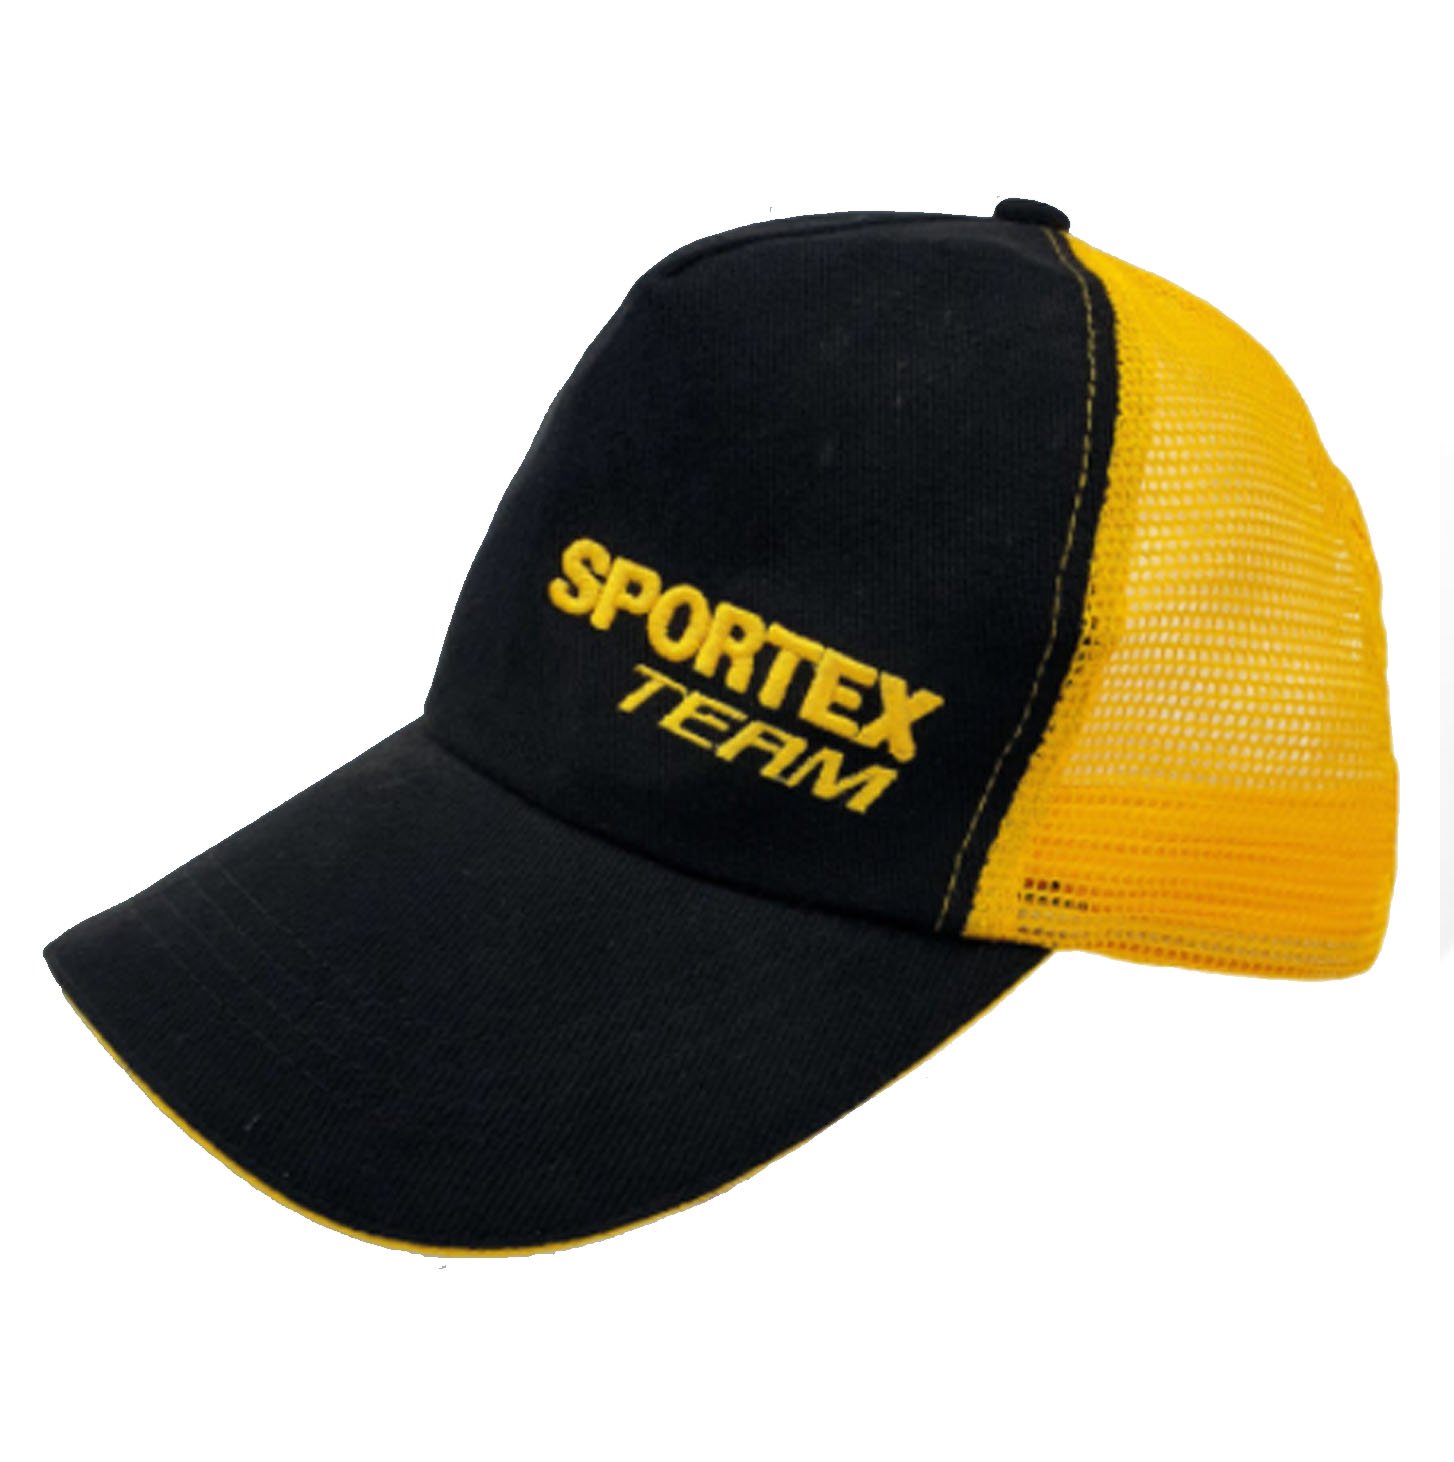 Casquette Base Cap Black/Yellow Team Sportex